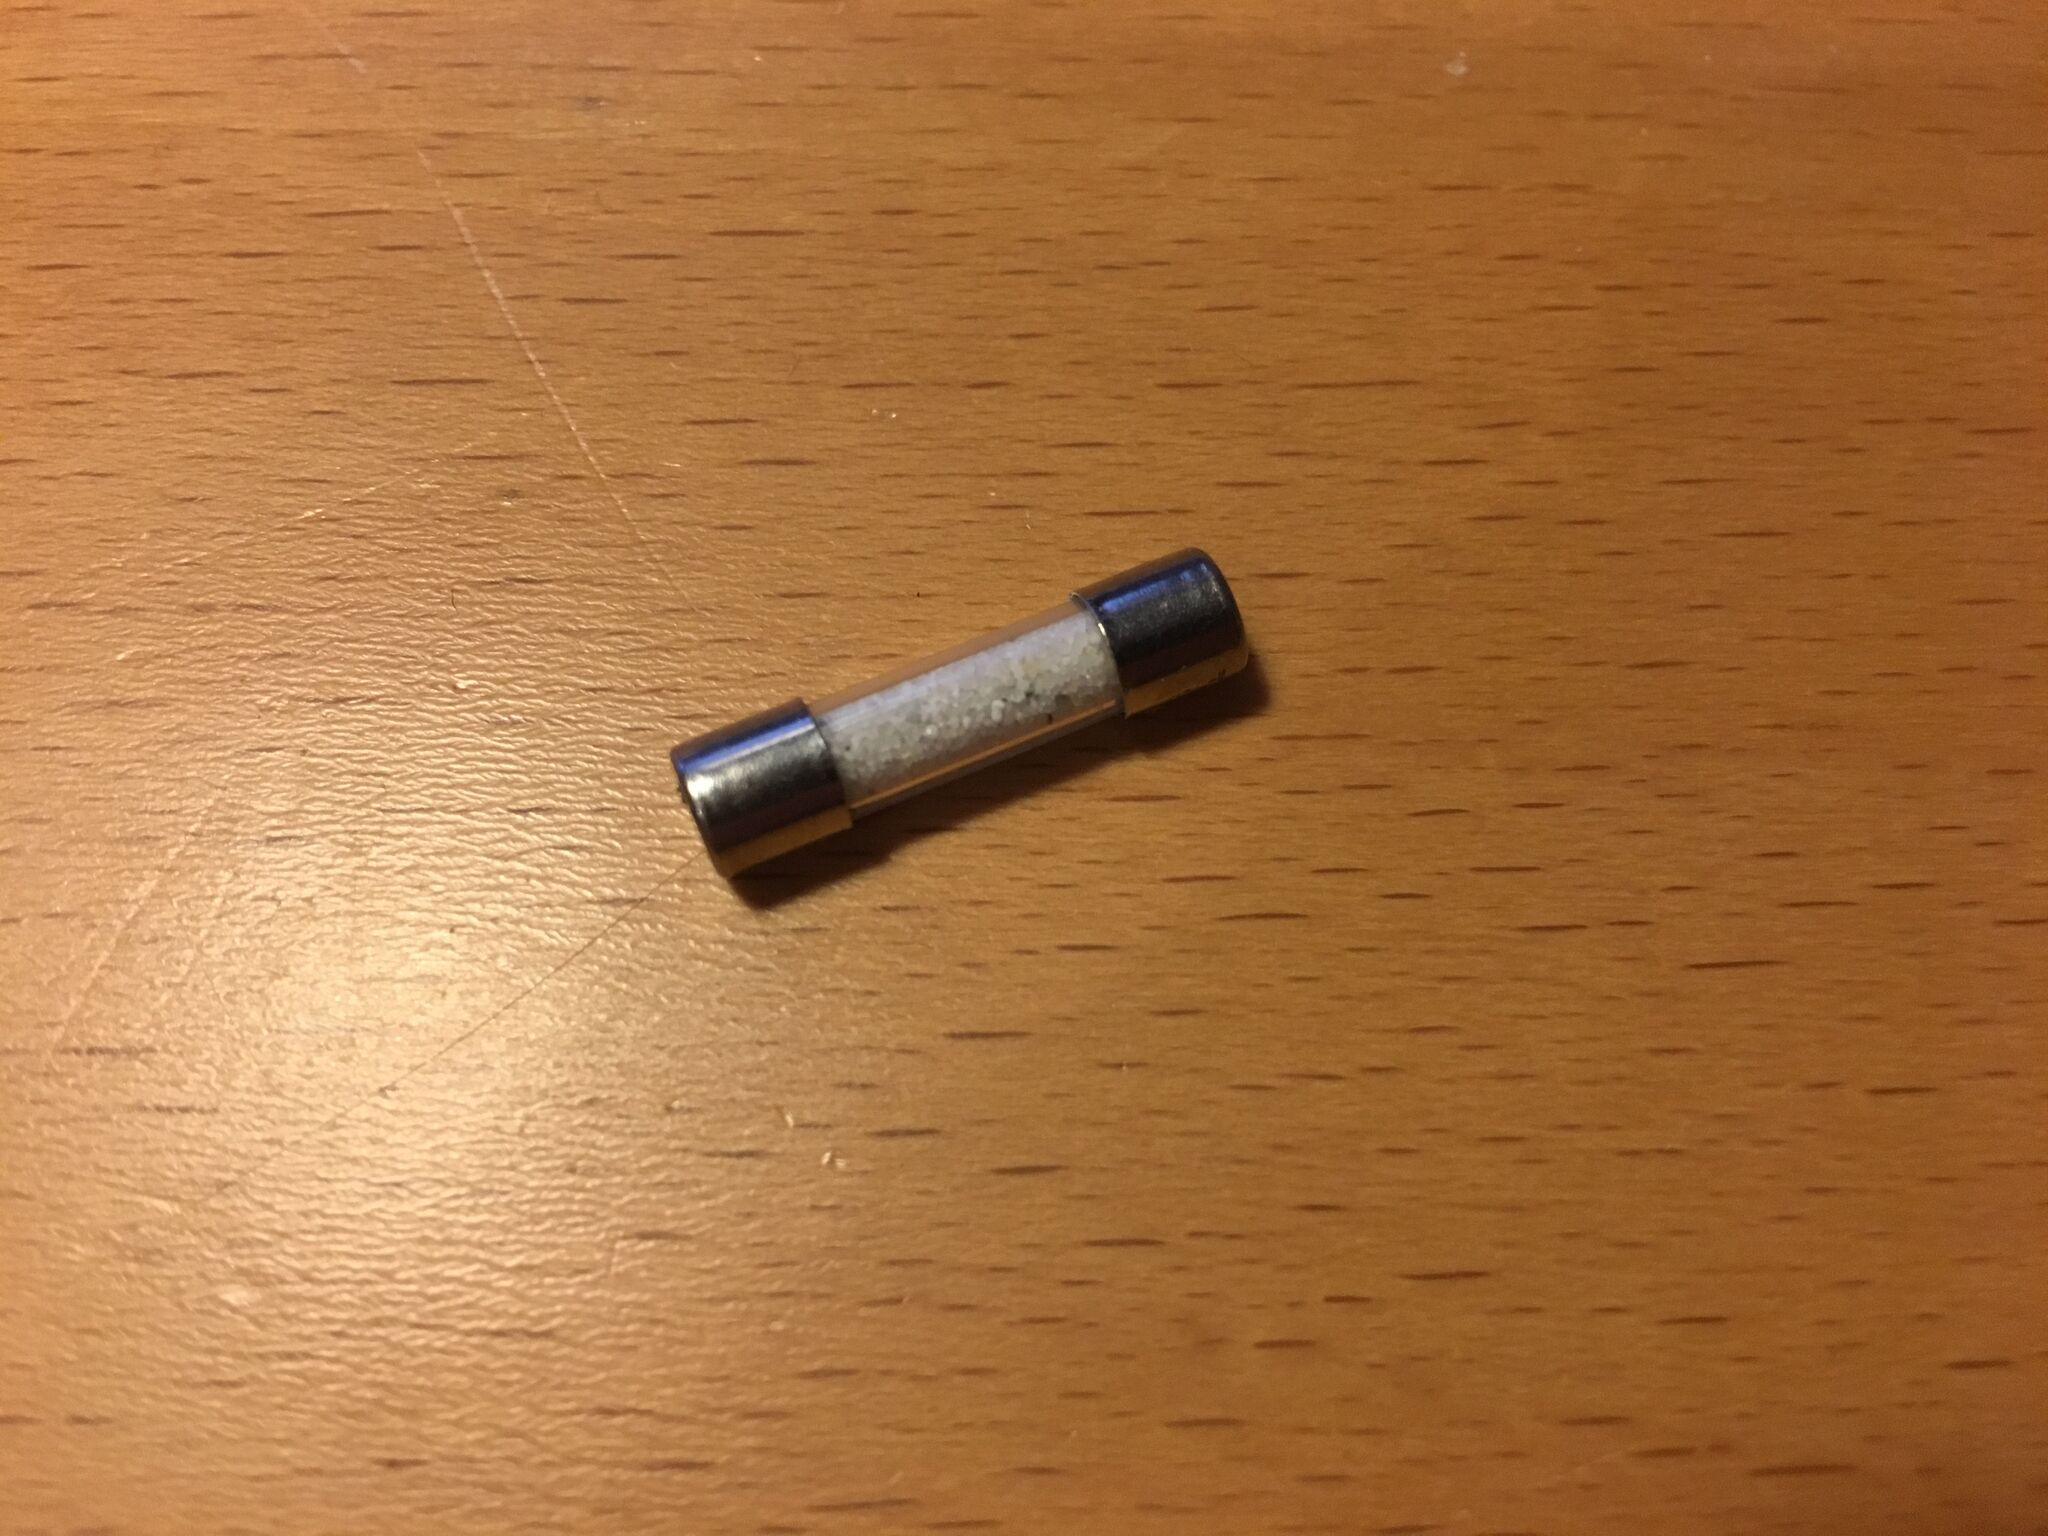 The bad fuse. 250V 3.0A